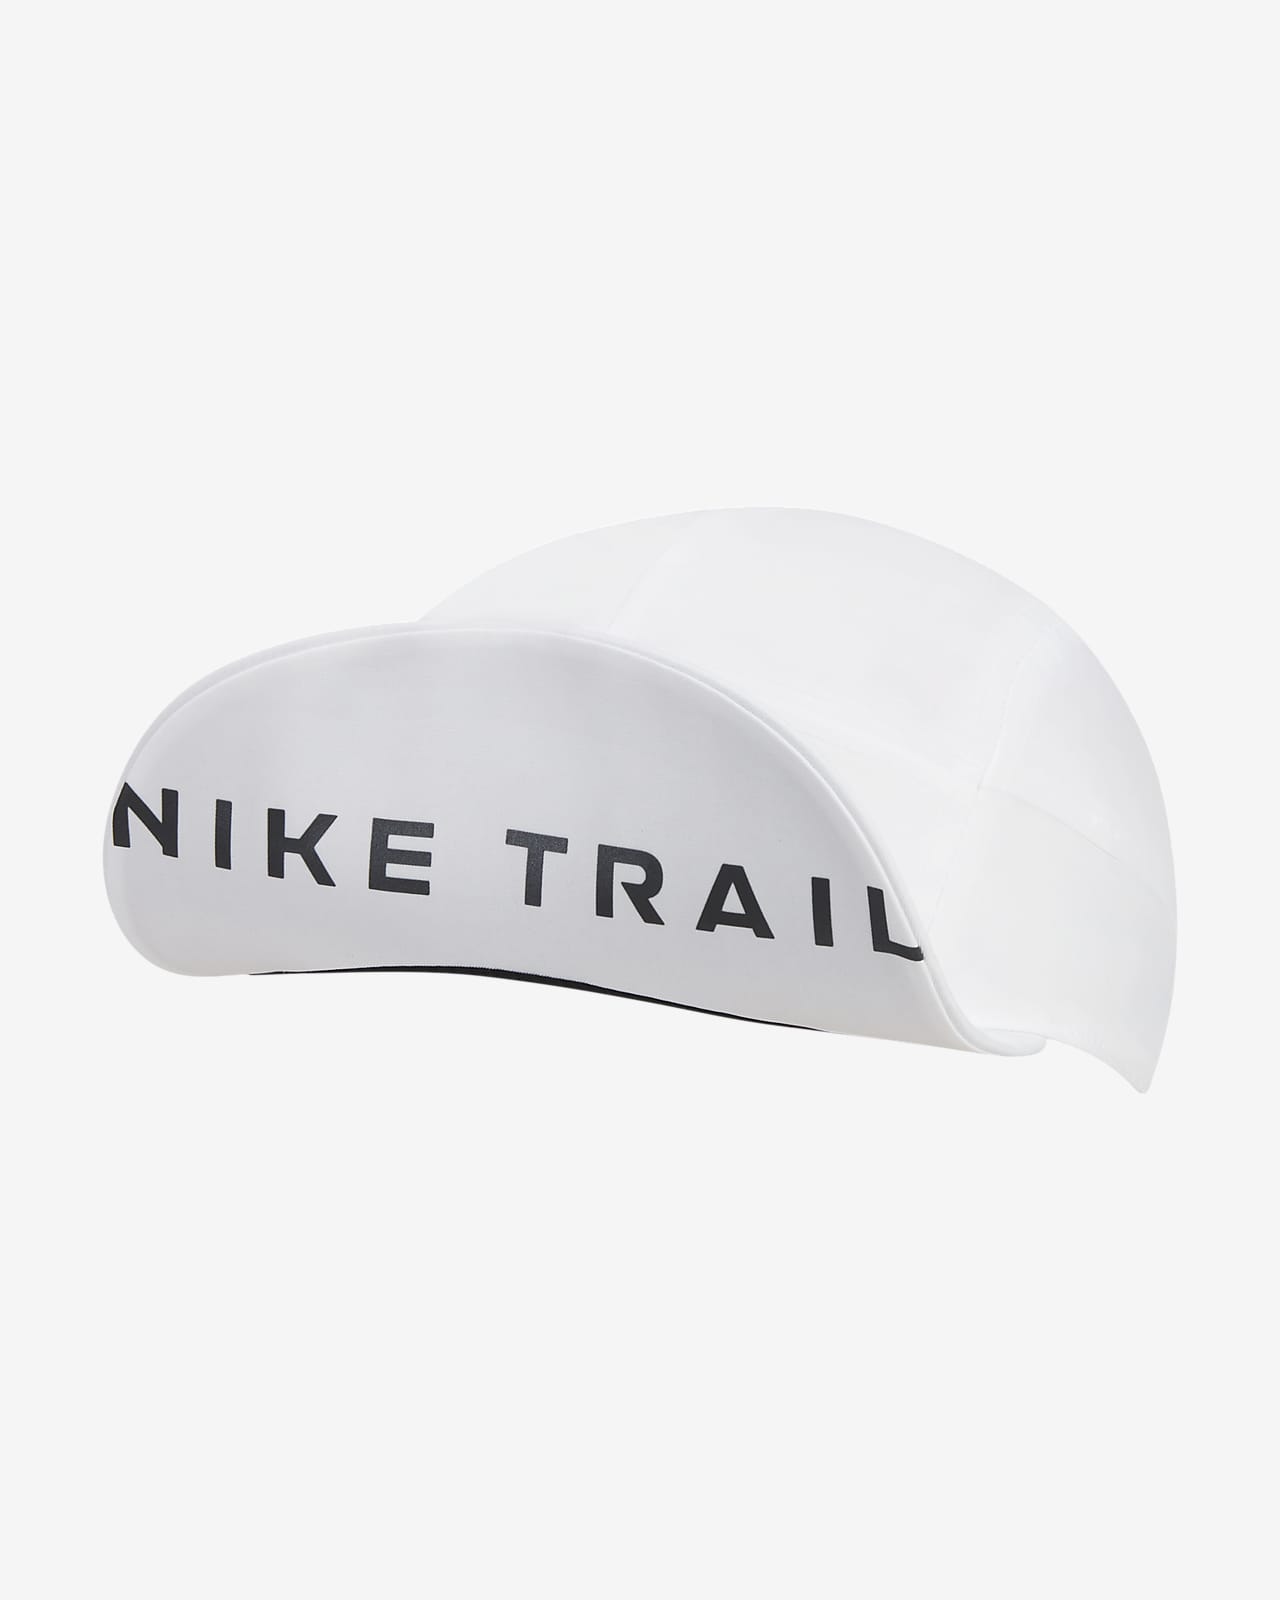 AW84 Trail Running Cap. Nike